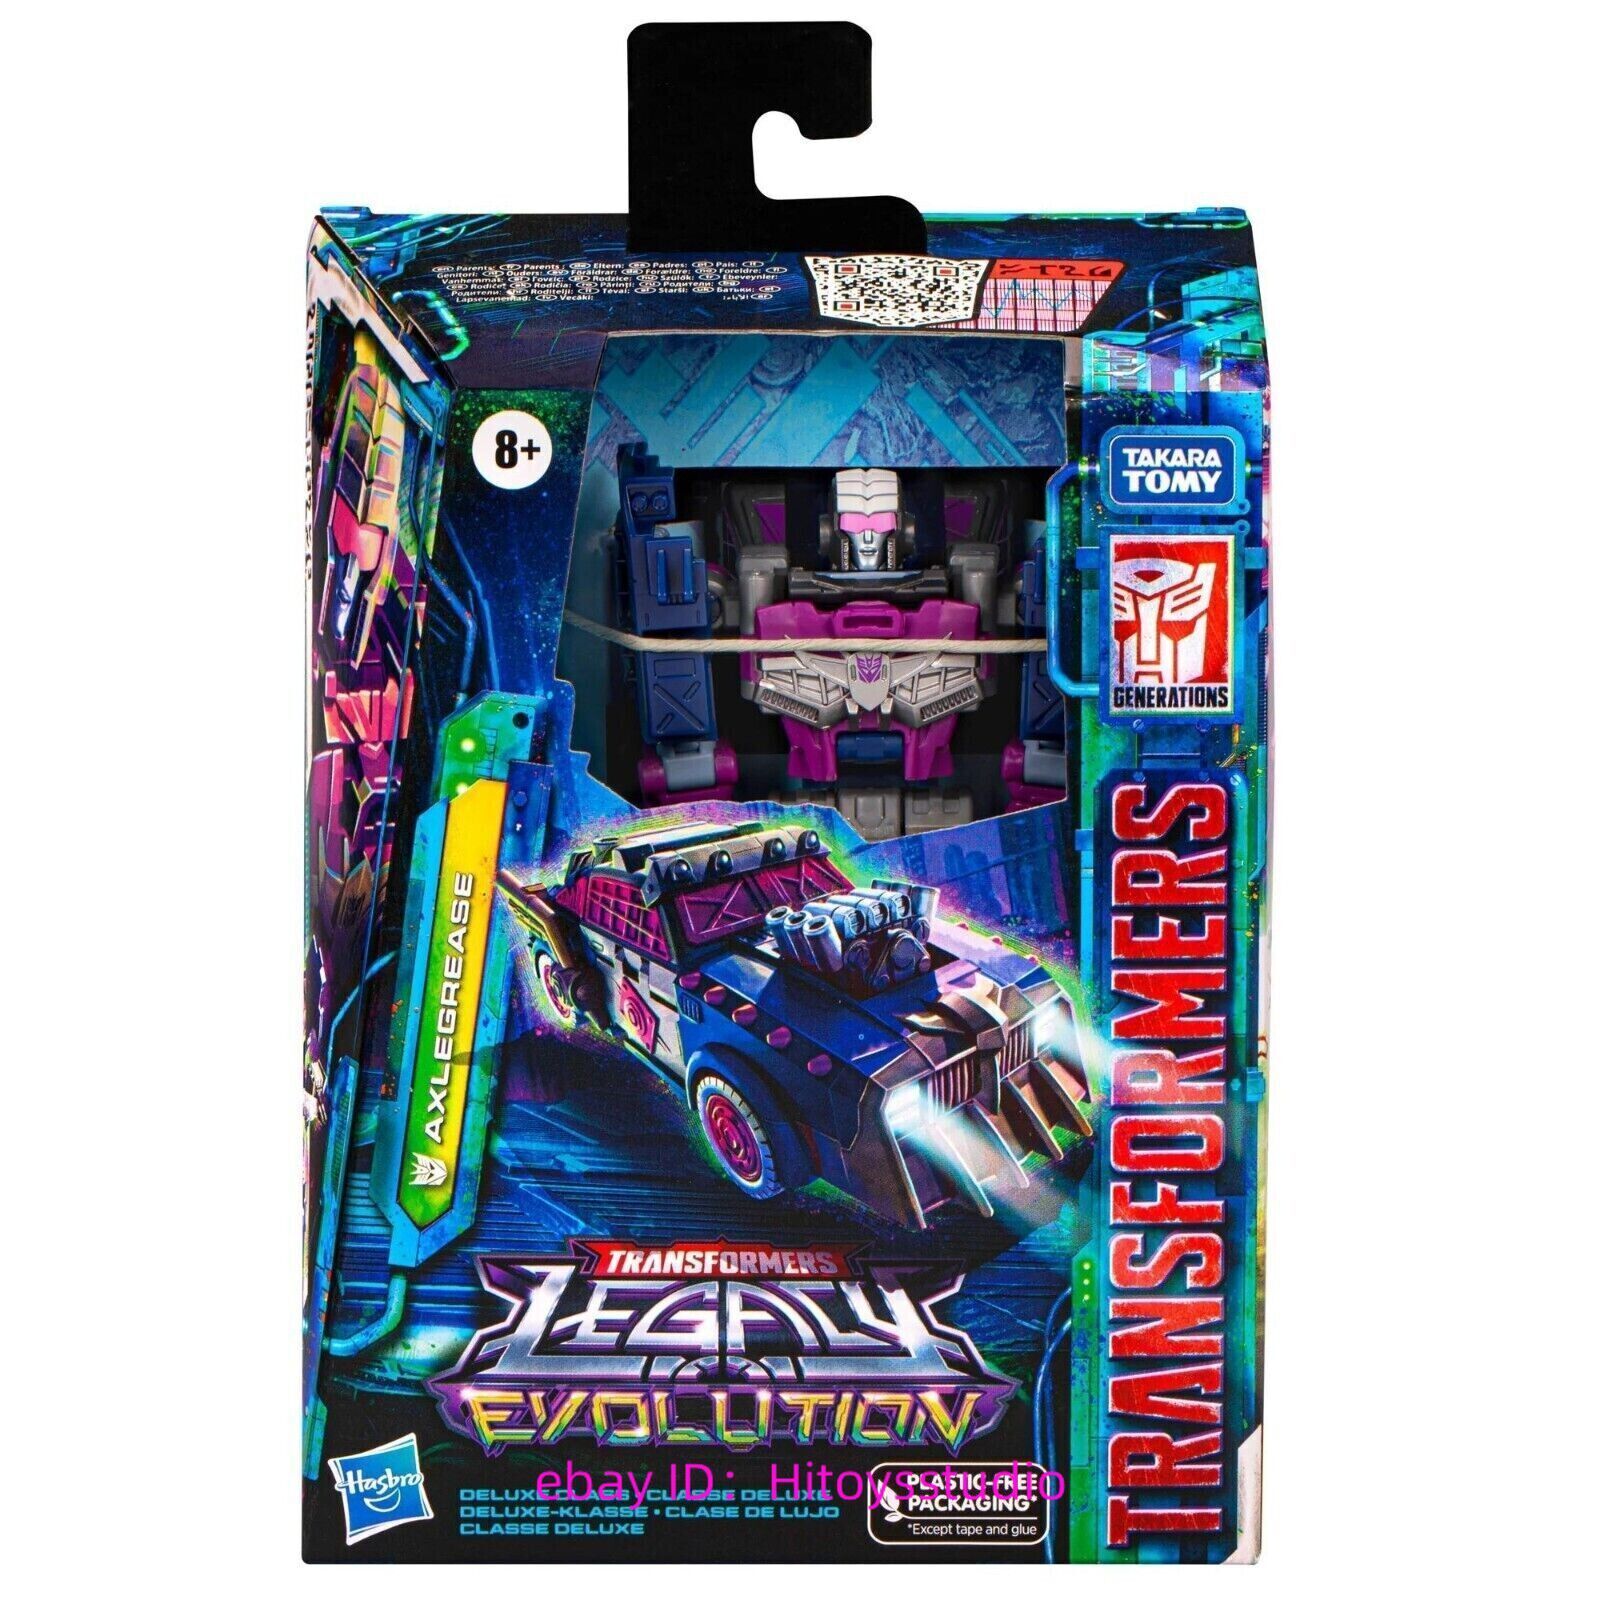 Hasbro Transformers Axlegrease Decepticon Legacy Evolution Deluxe Action Figure